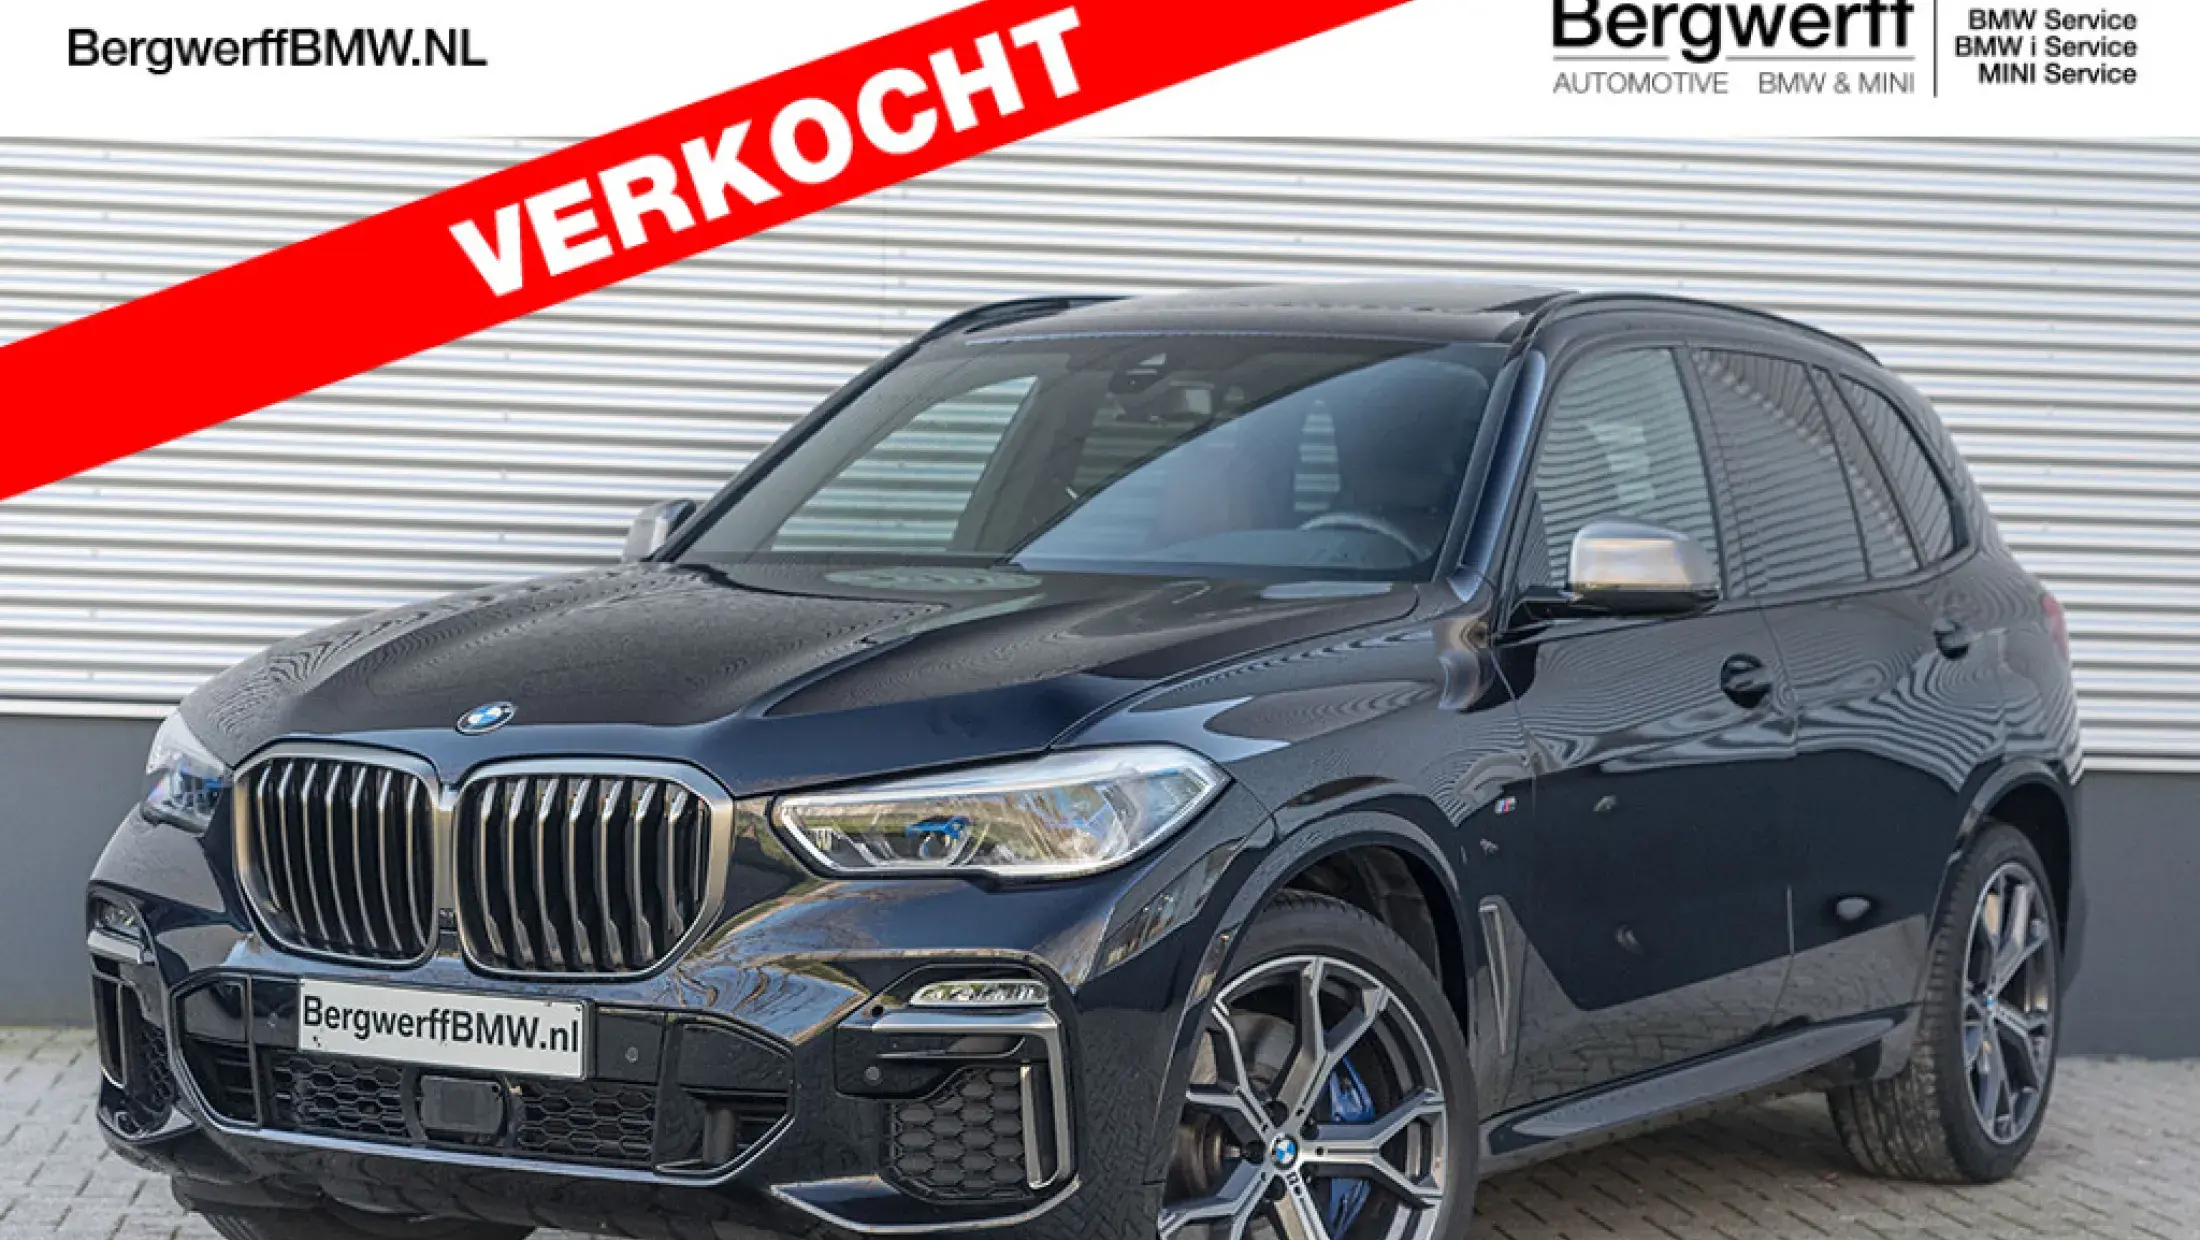 BMW X5 M50d Carbon Black Metallic SUV G05 Leder Vernasca design Coffee 2019 Bergwerff